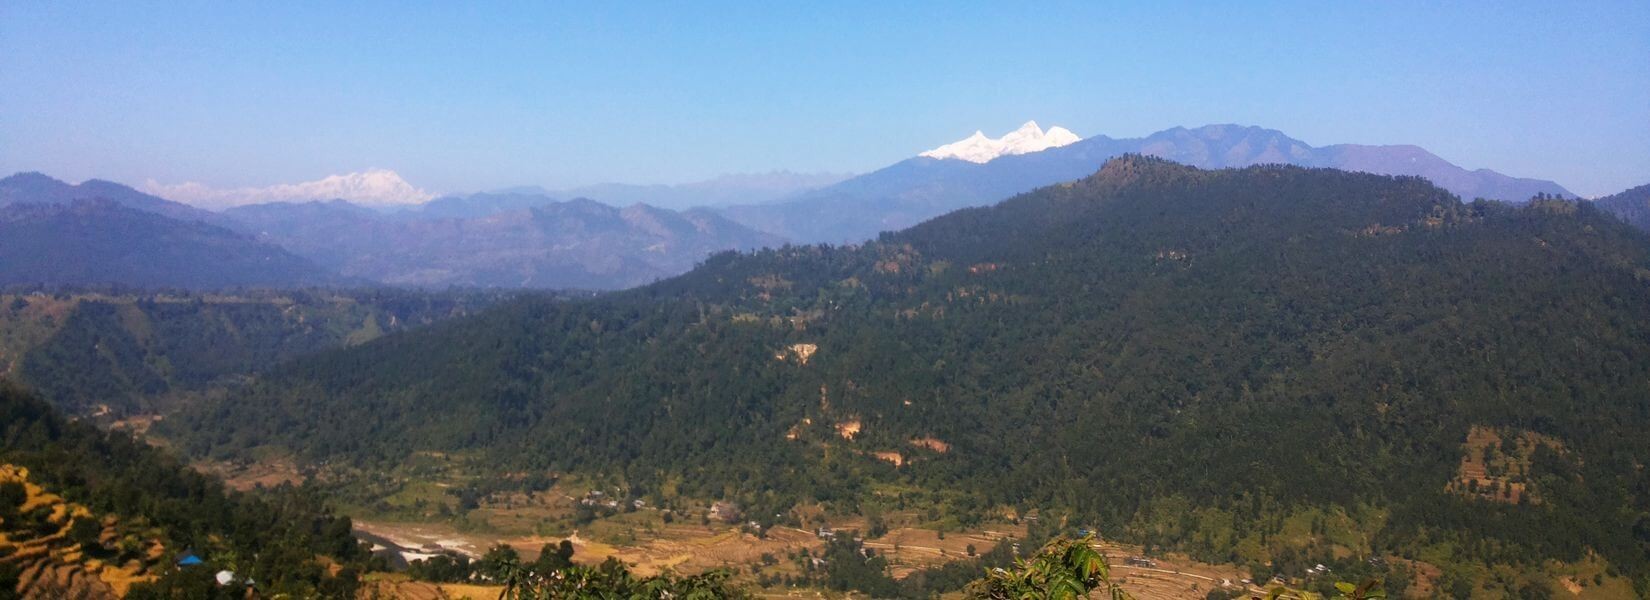 Nepal Tour View